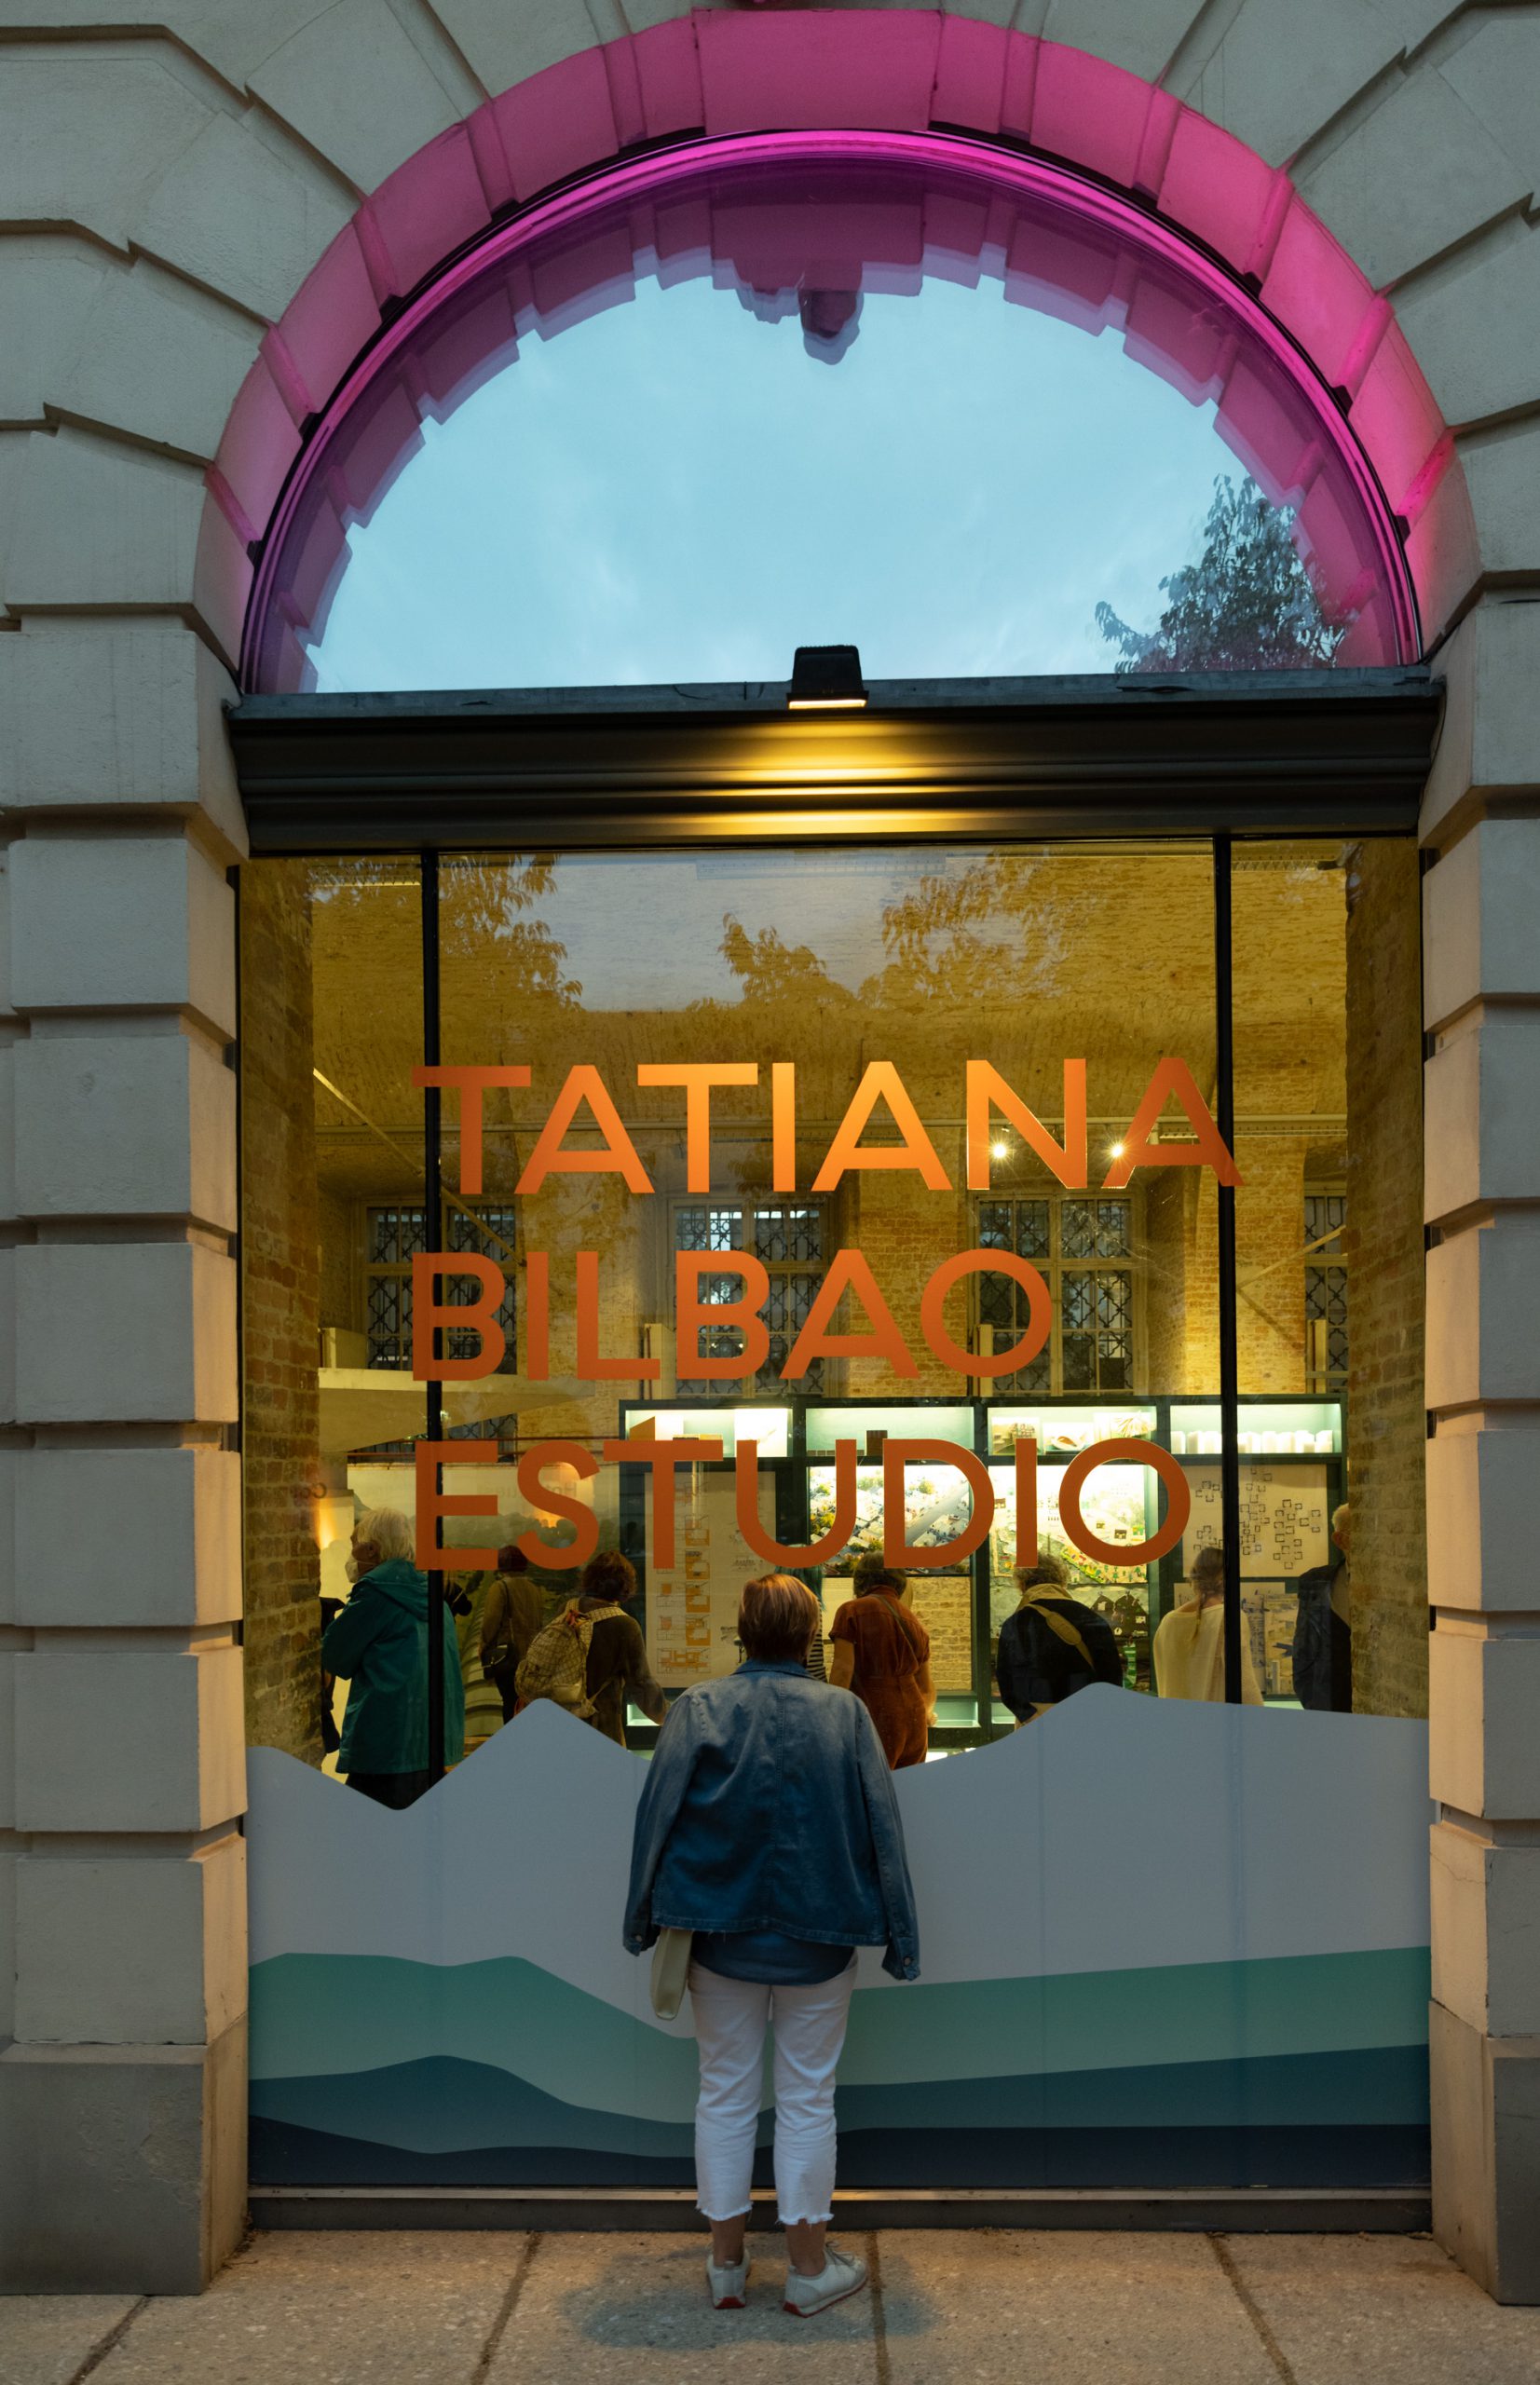 Window with lettering "Tatiana Bilbao Estudio", a person looking in